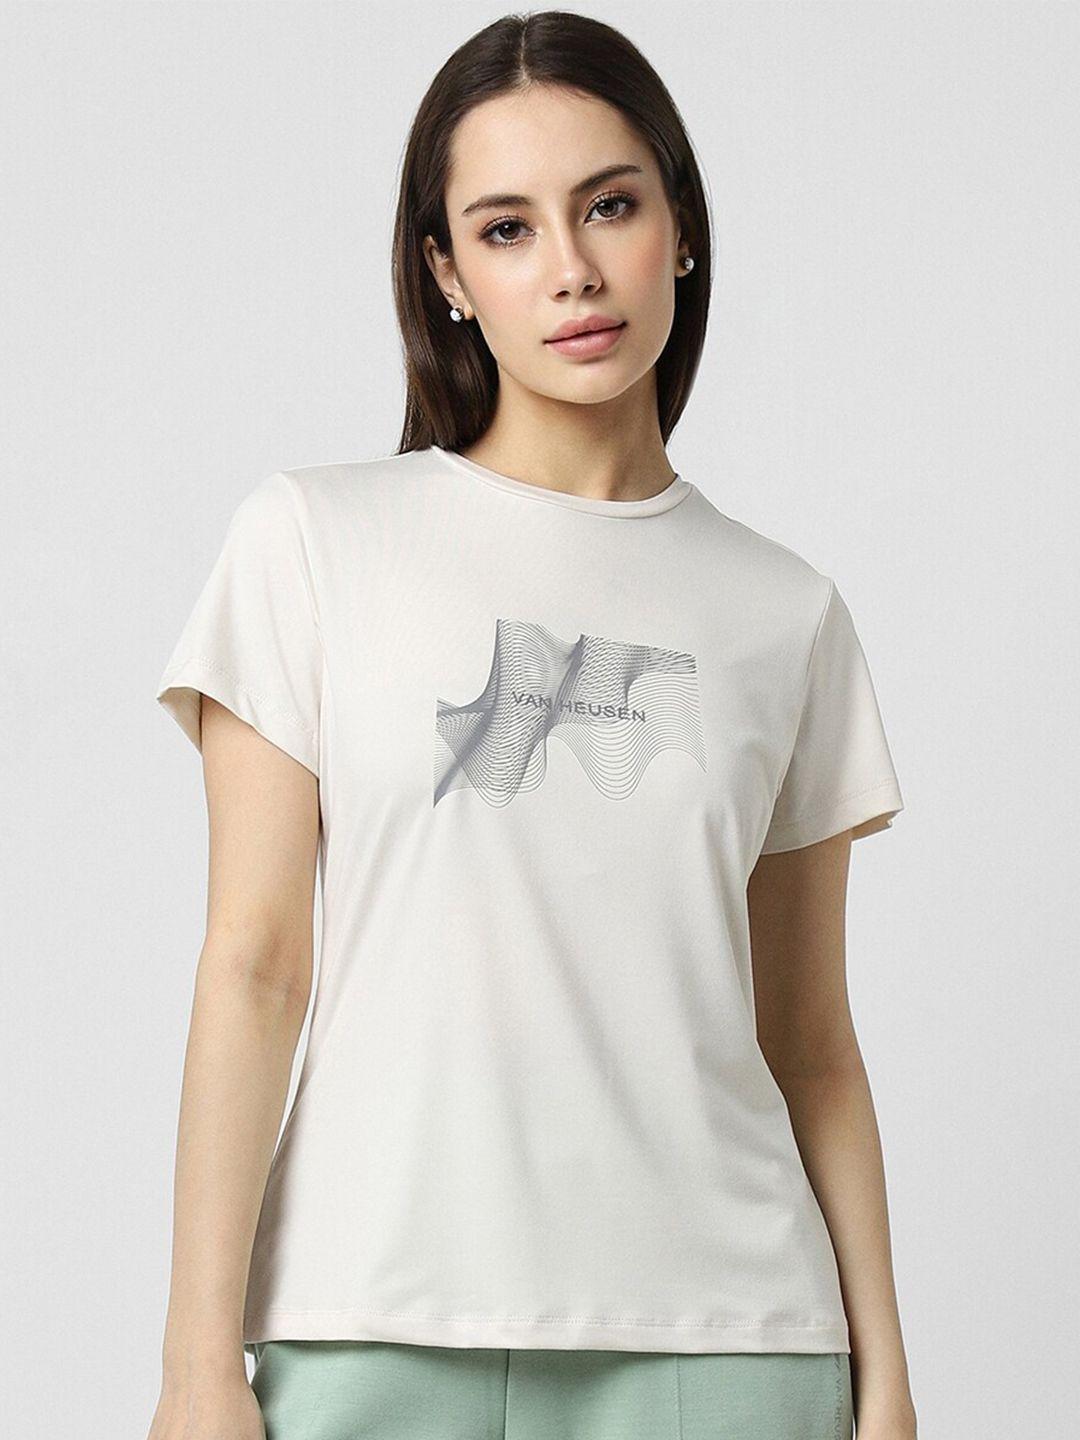 van heusen woman brand logo printed t-shirt